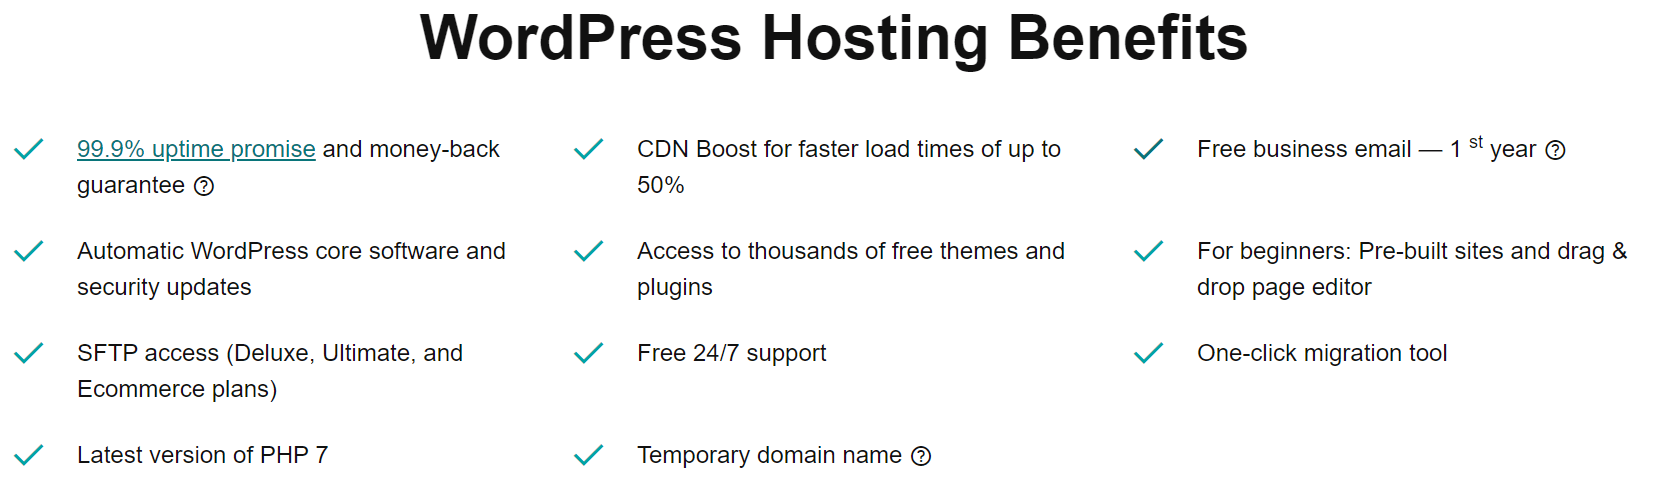 WordPress Hosting Benefits